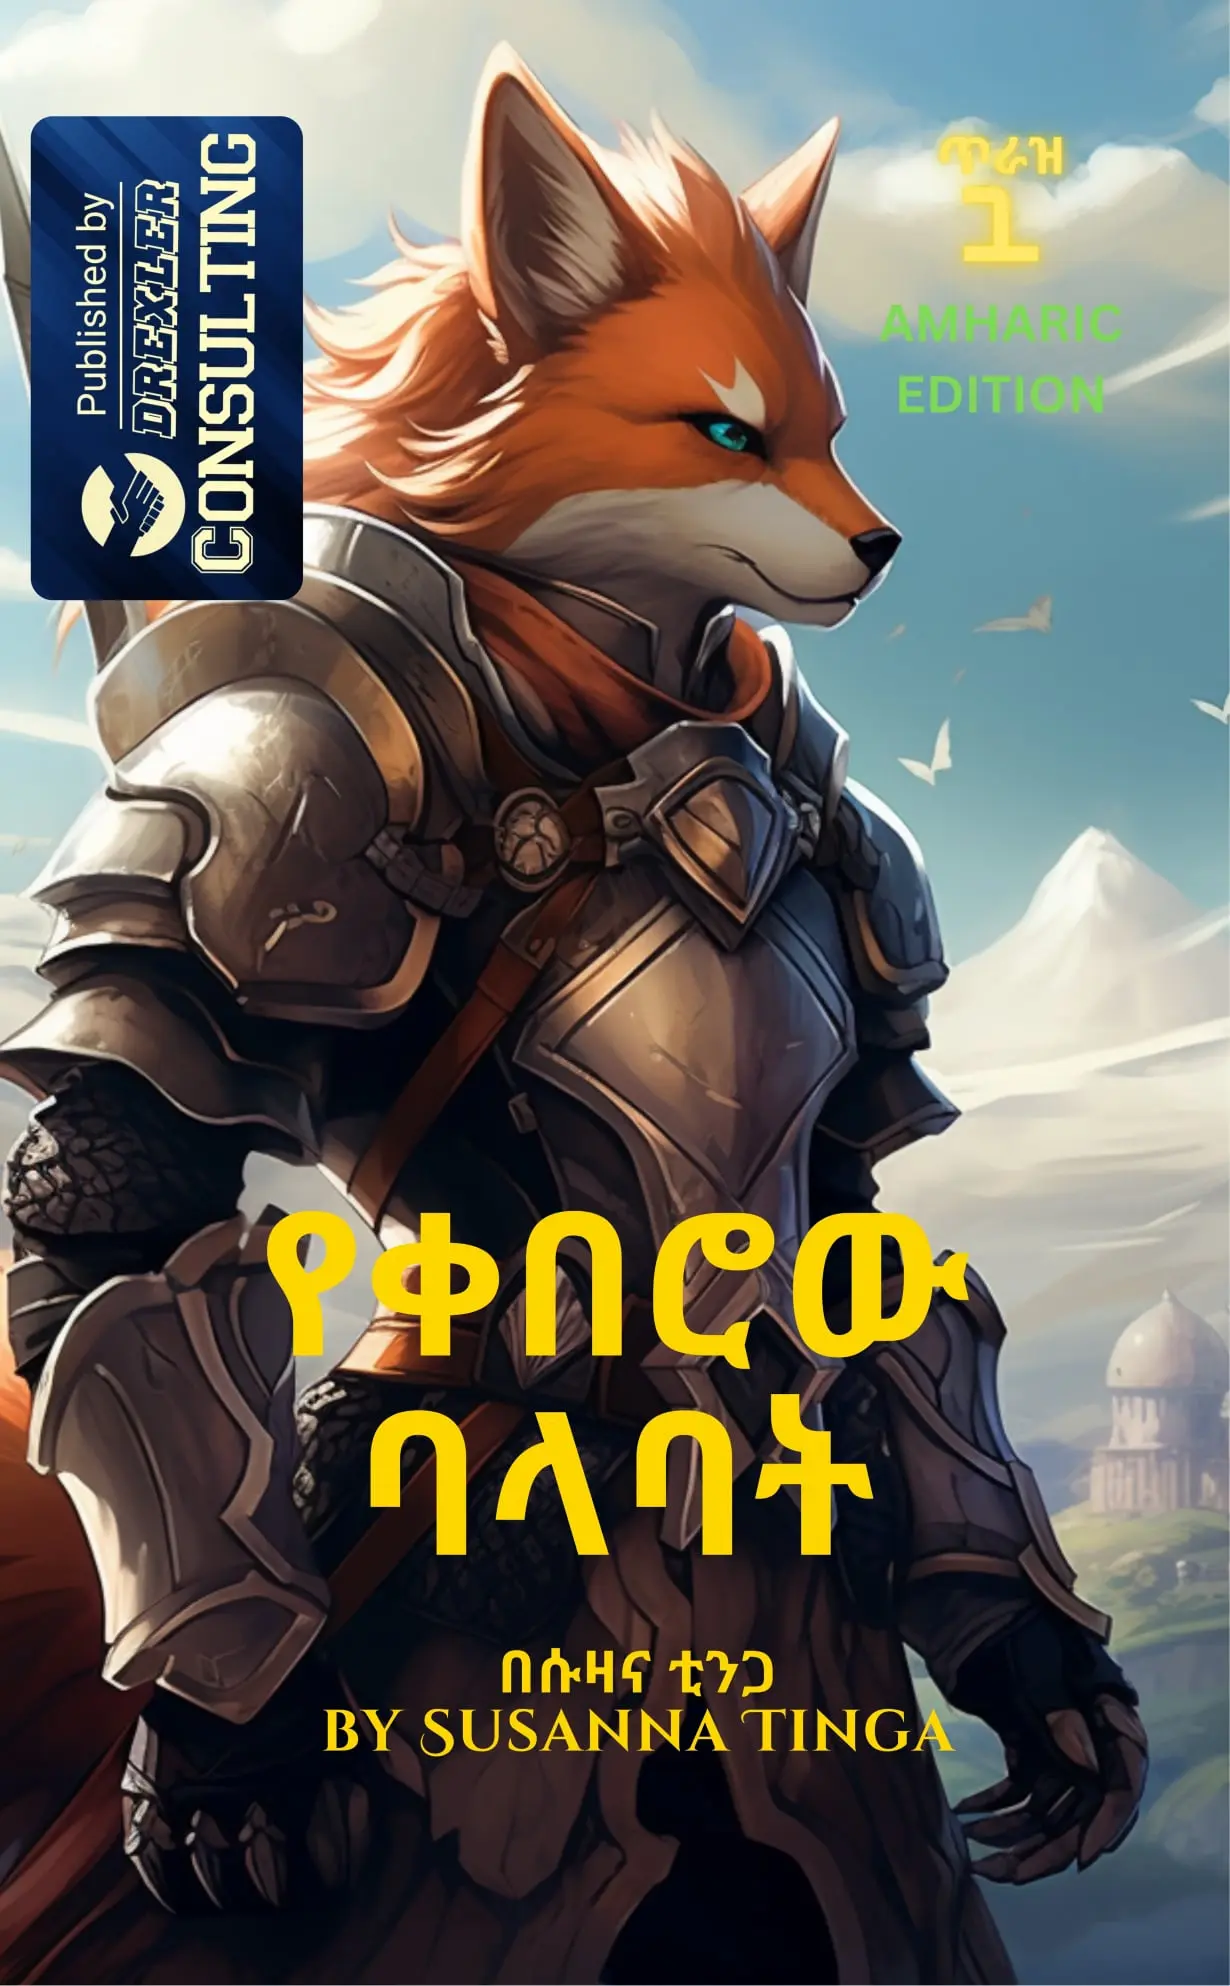 The Fox Knight in Amharic translation